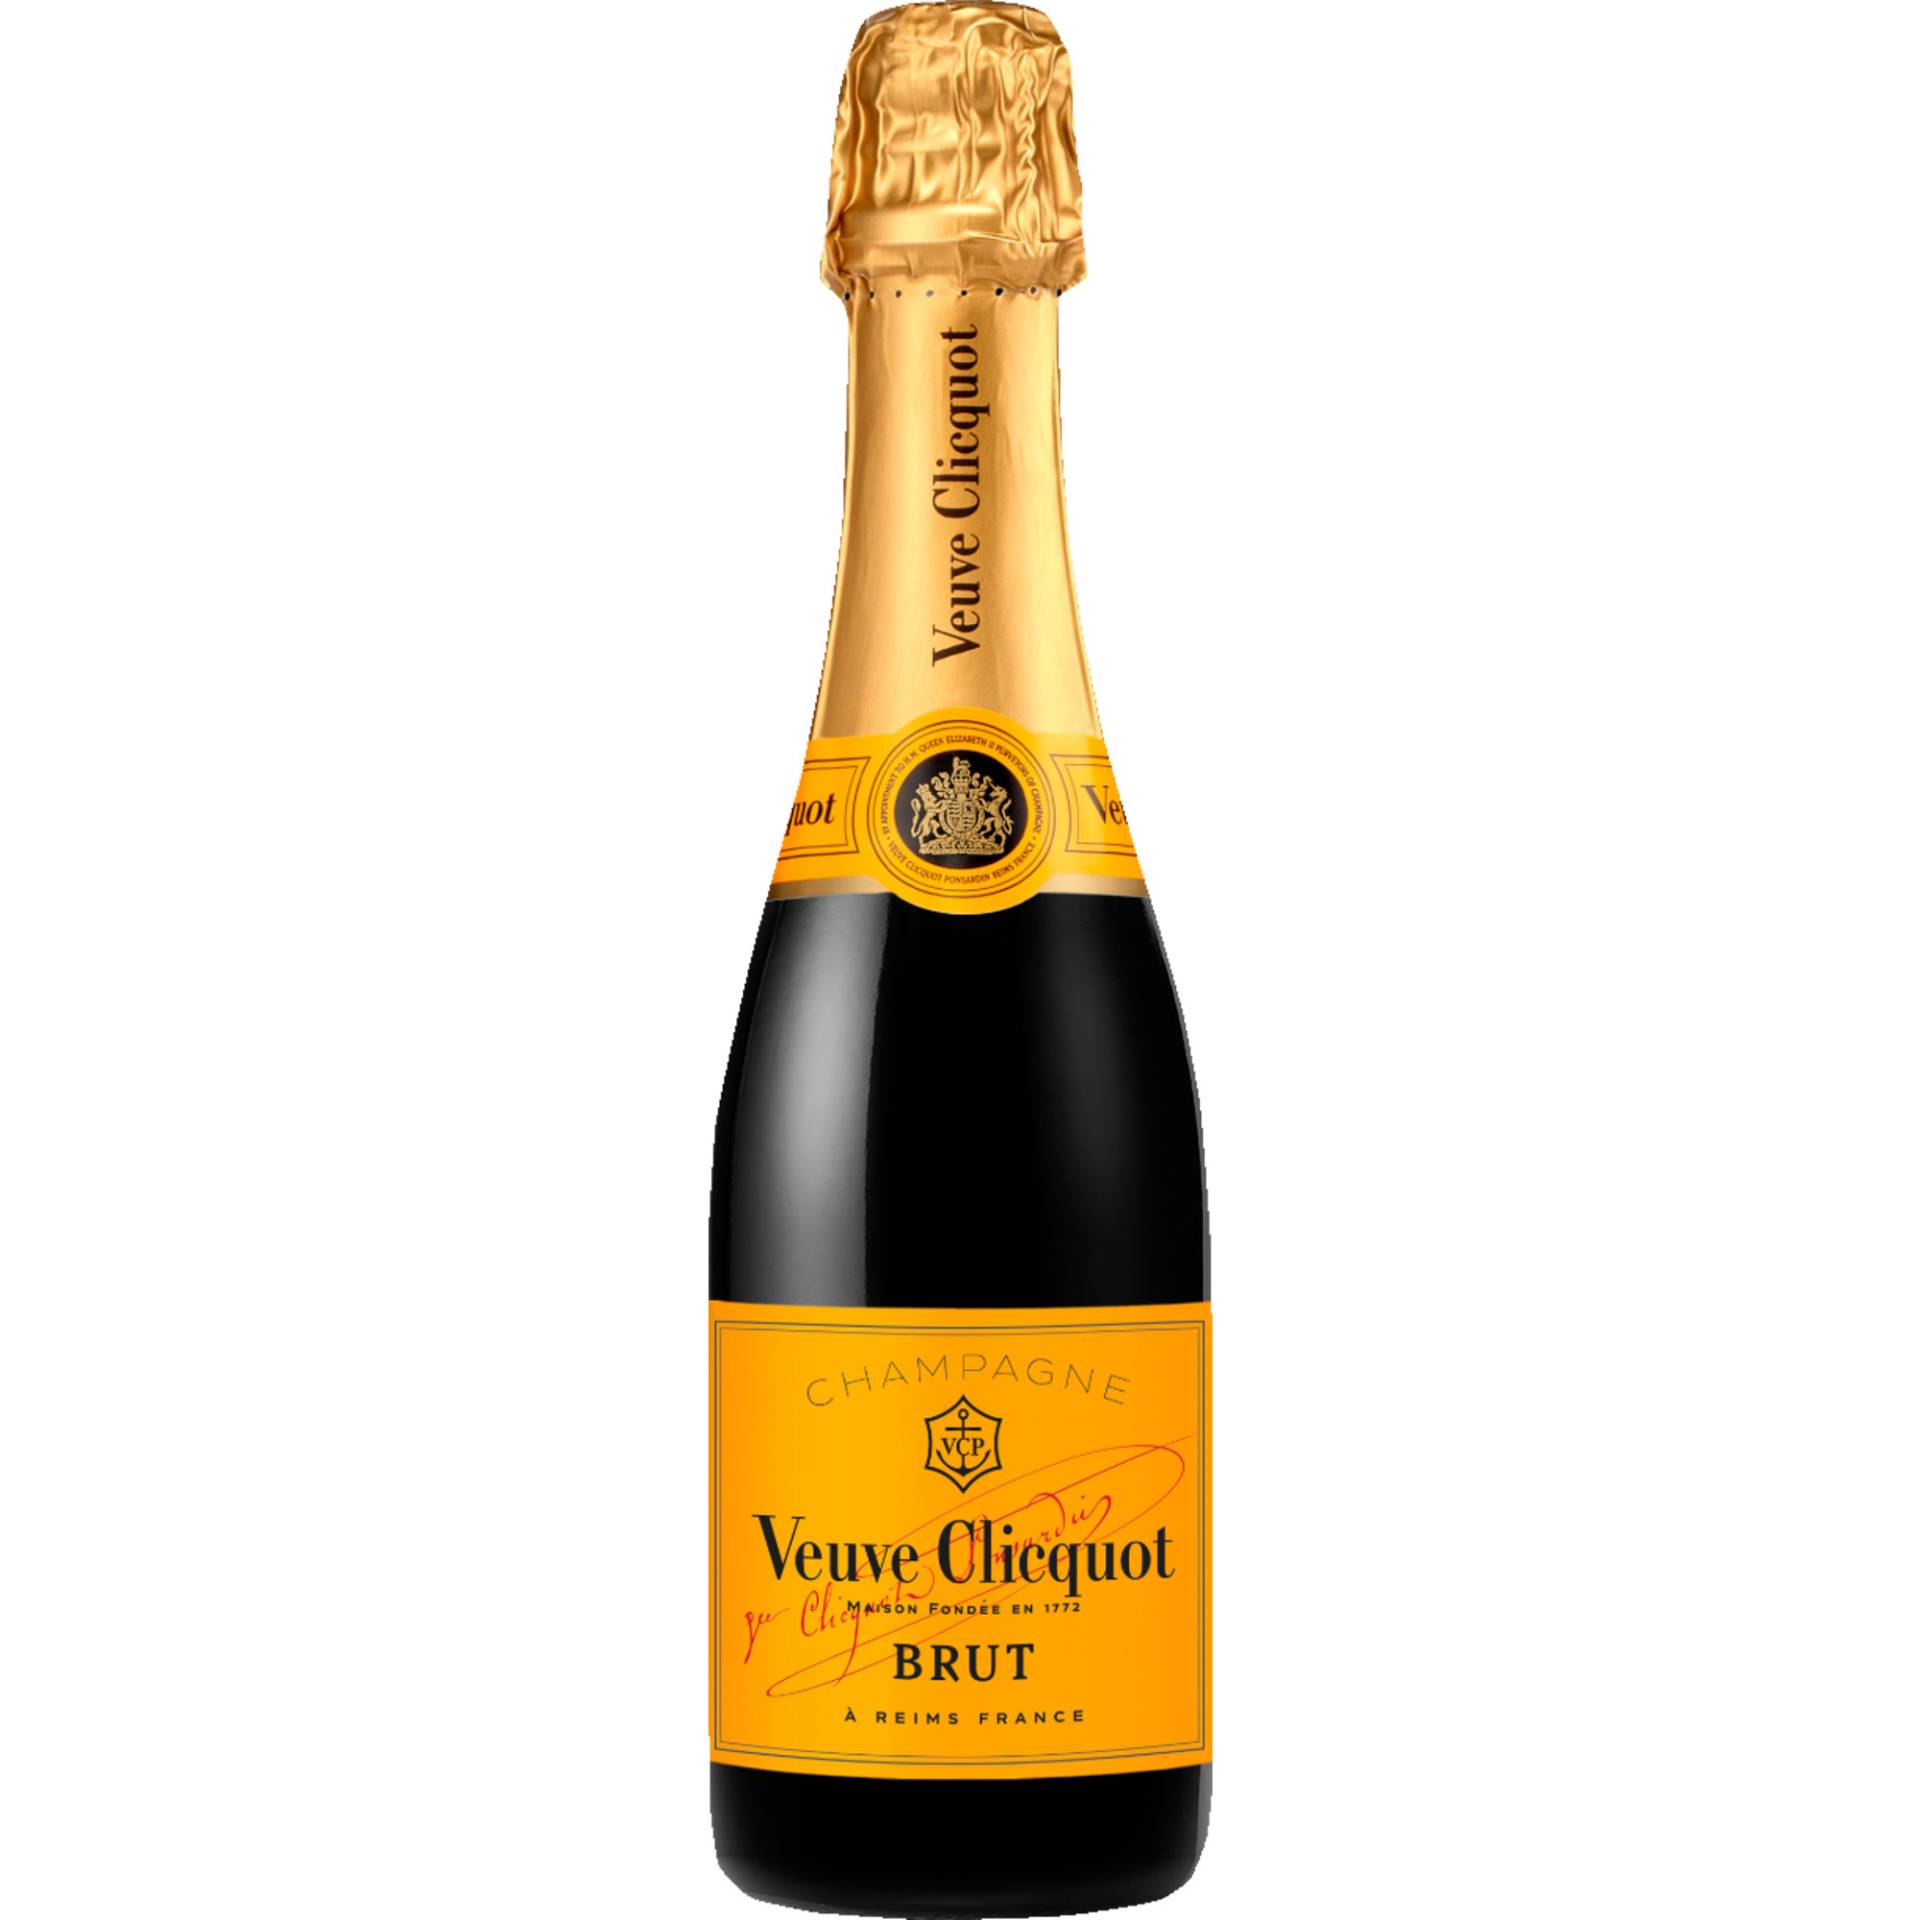 Champagne Veuve Clicquot, Brut Champagne AC 0,375 L, Champagne, Schaumwein von Veuve Clicquot Ponsardin, Reims, France